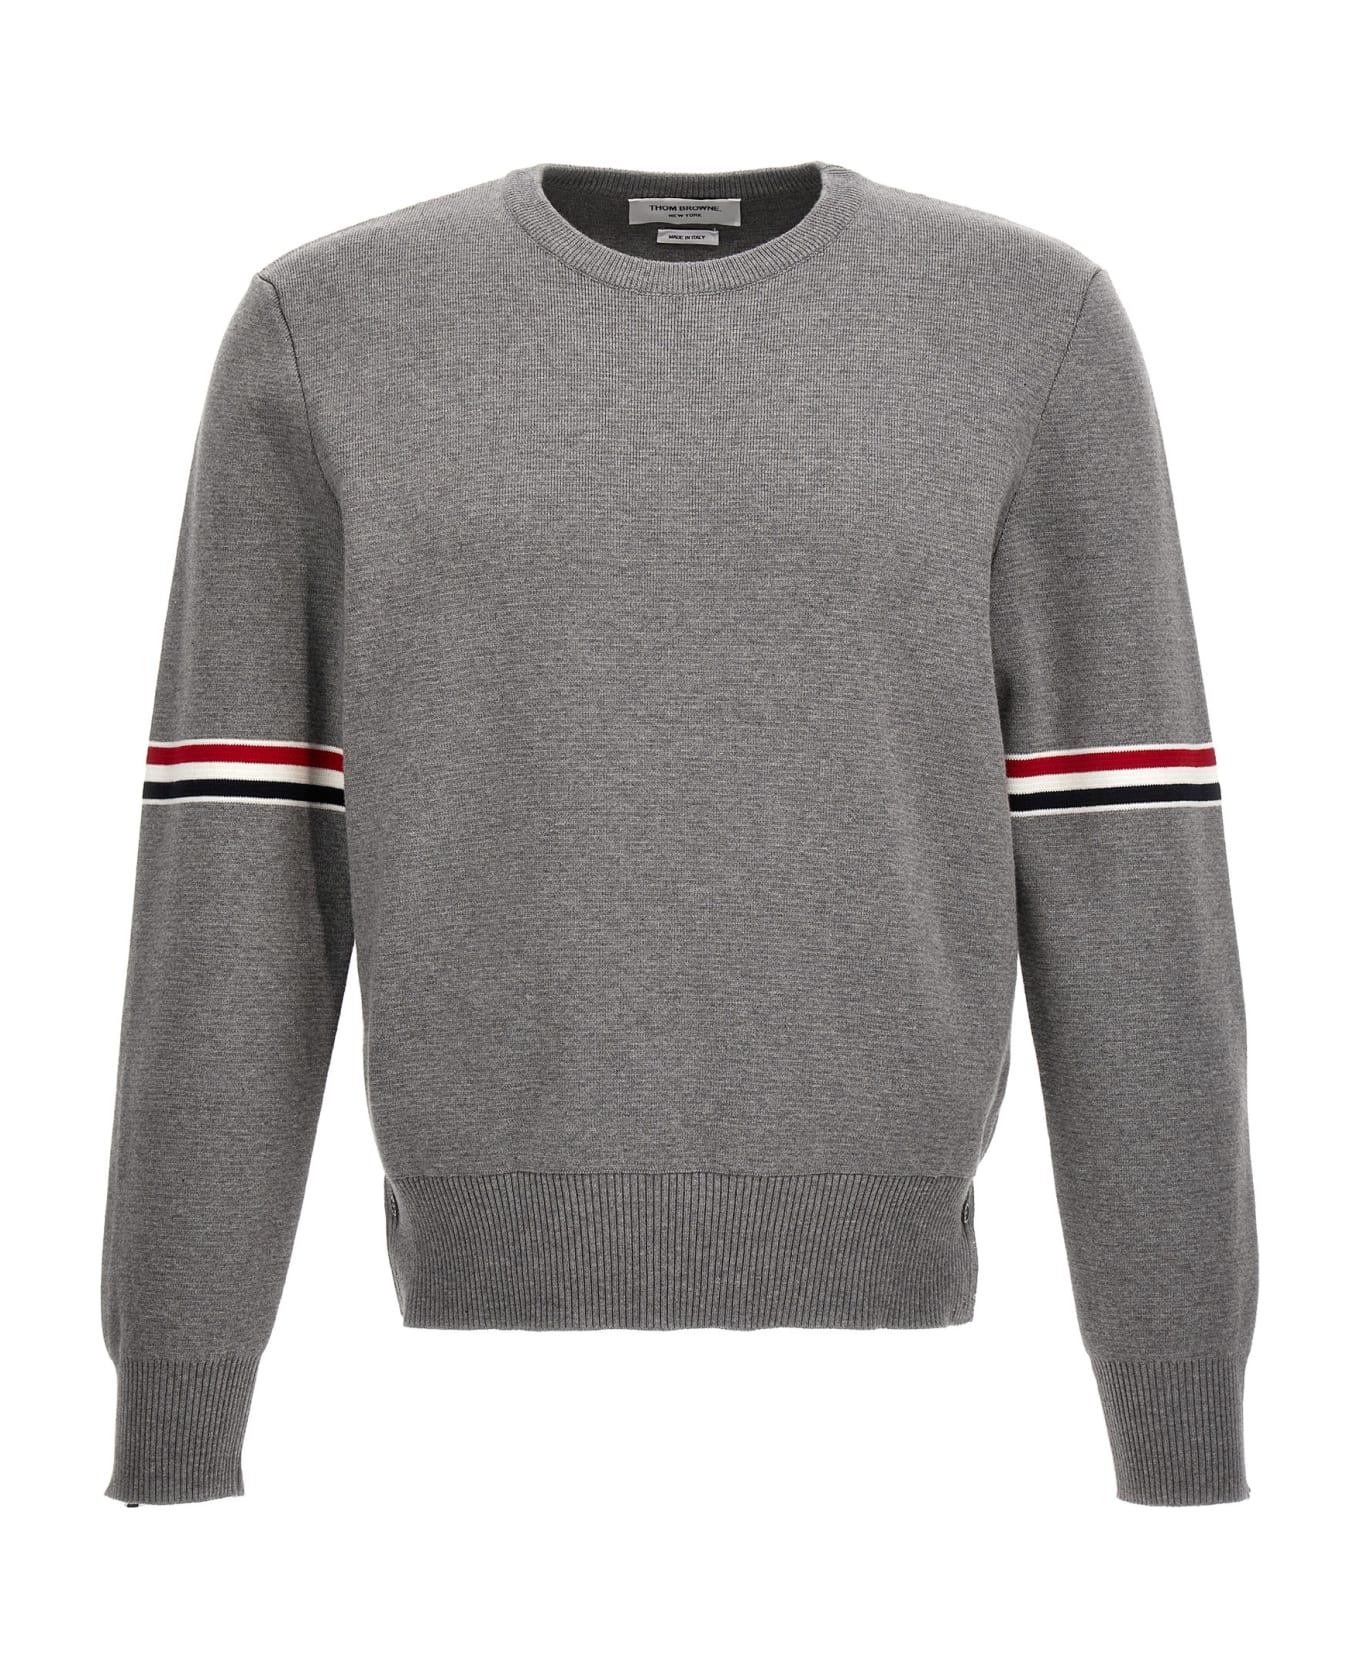 Thom Browne Classic Sweater - Light Grey